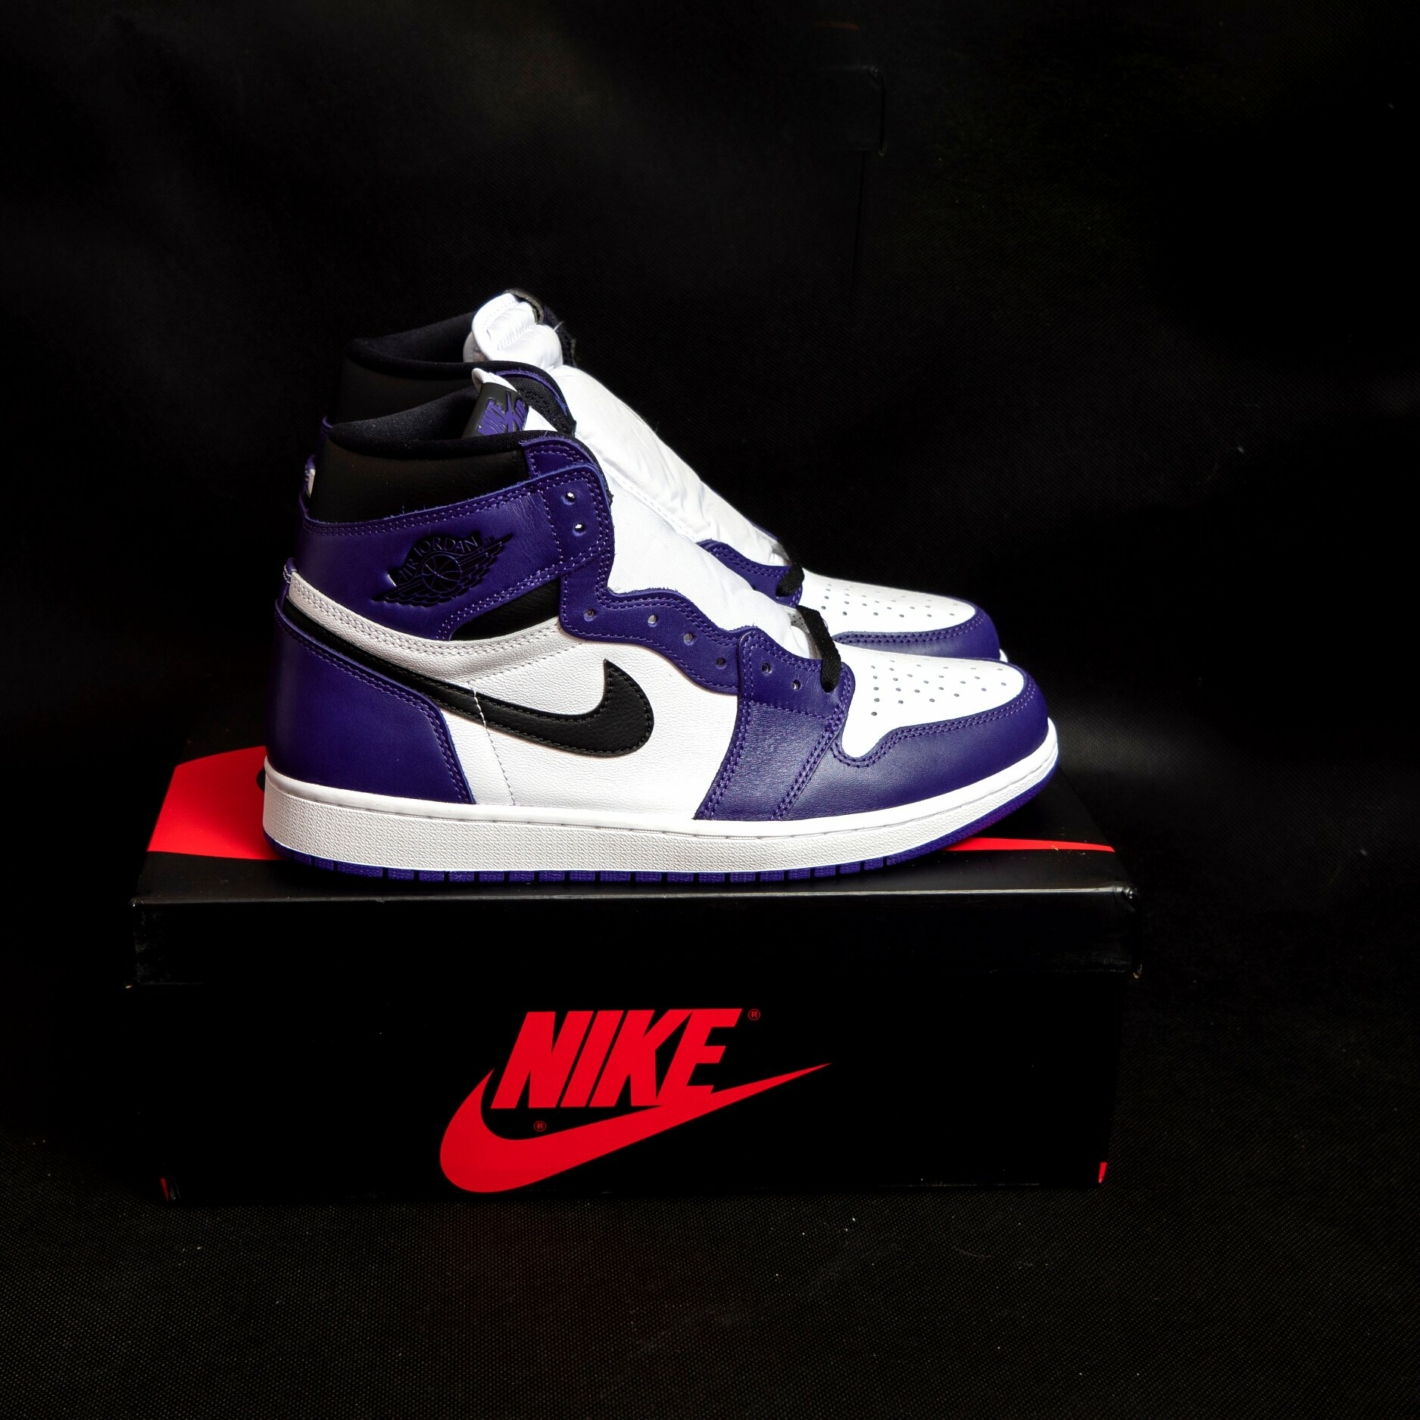 Nike Air Jordan 1 Retro High Court Purple © MKfoto/Shutterstock